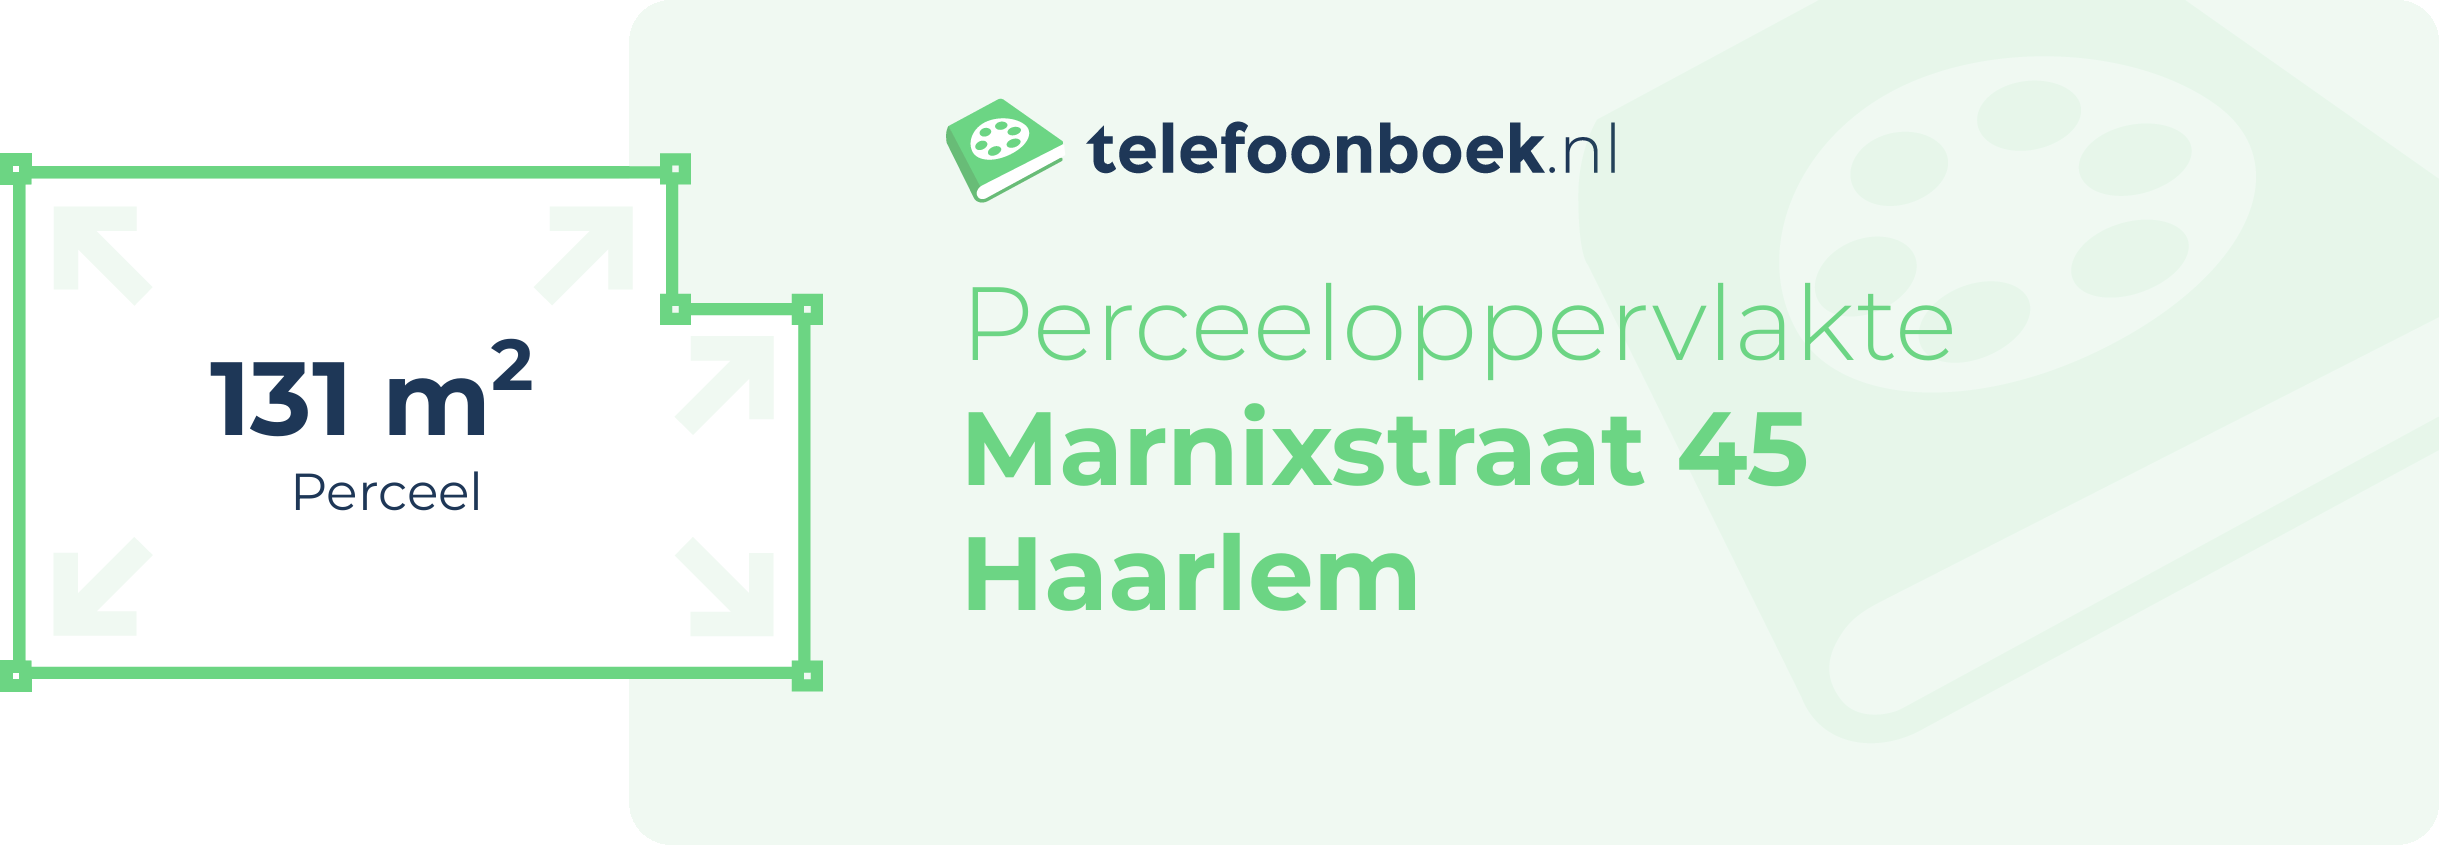 Perceeloppervlakte Marnixstraat 45 Haarlem